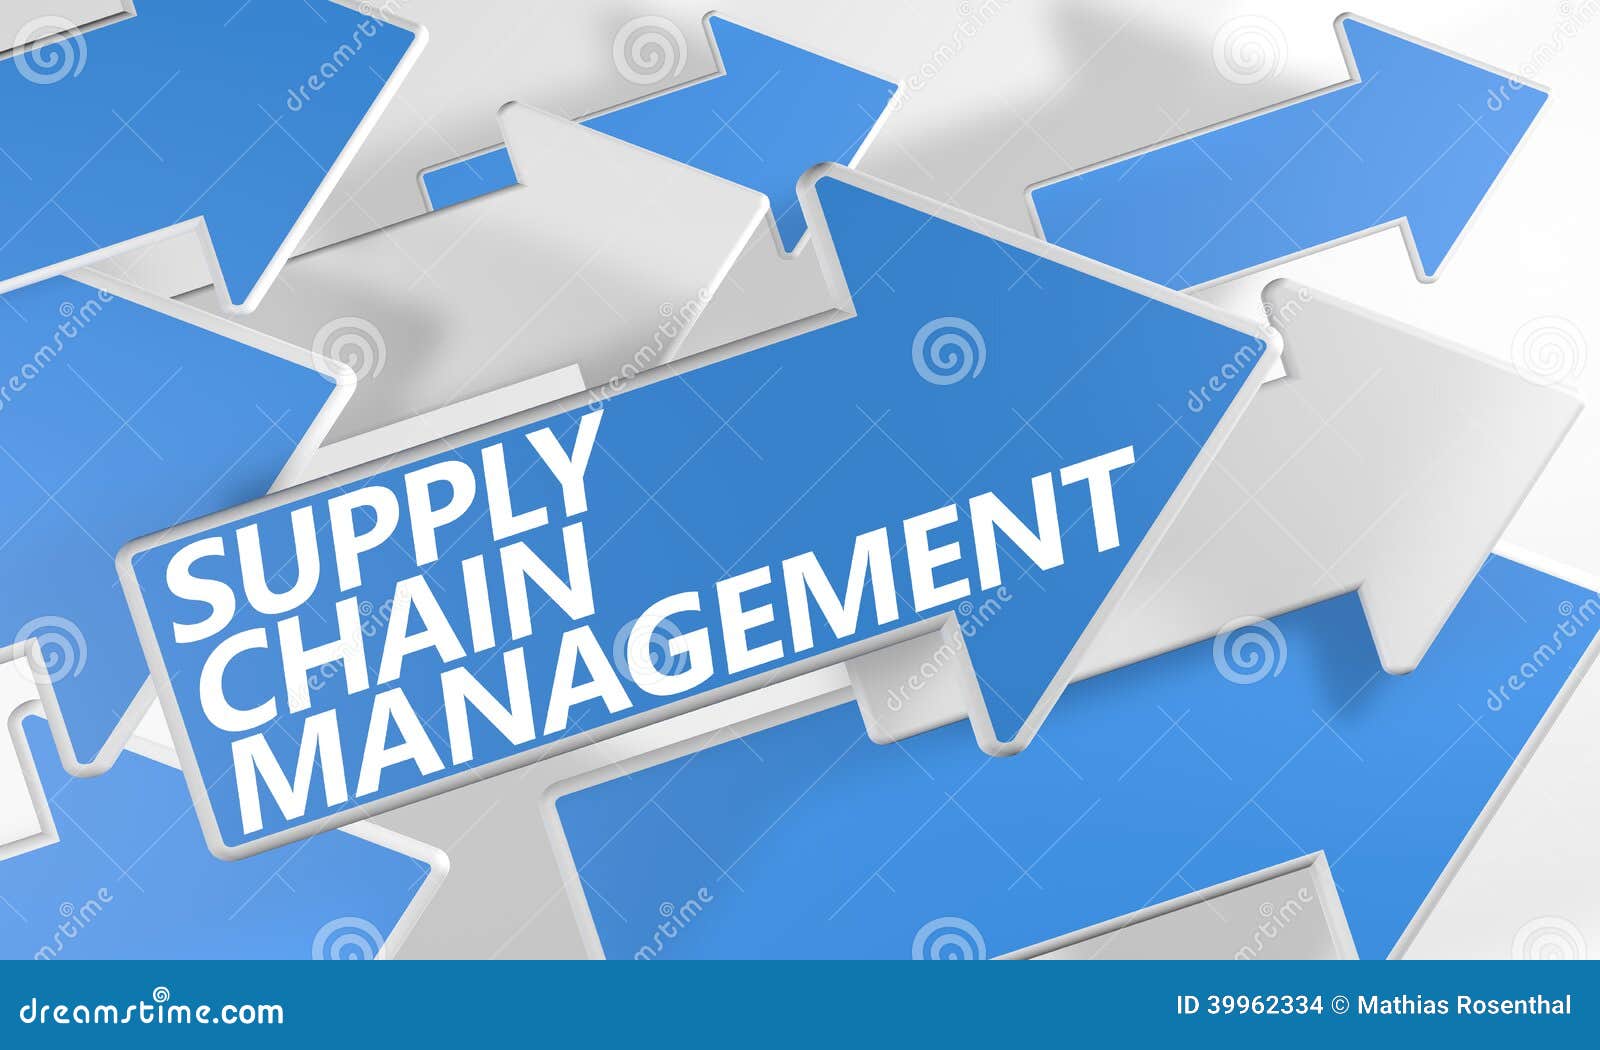 Management Tools - Supply Chain Management - Bain